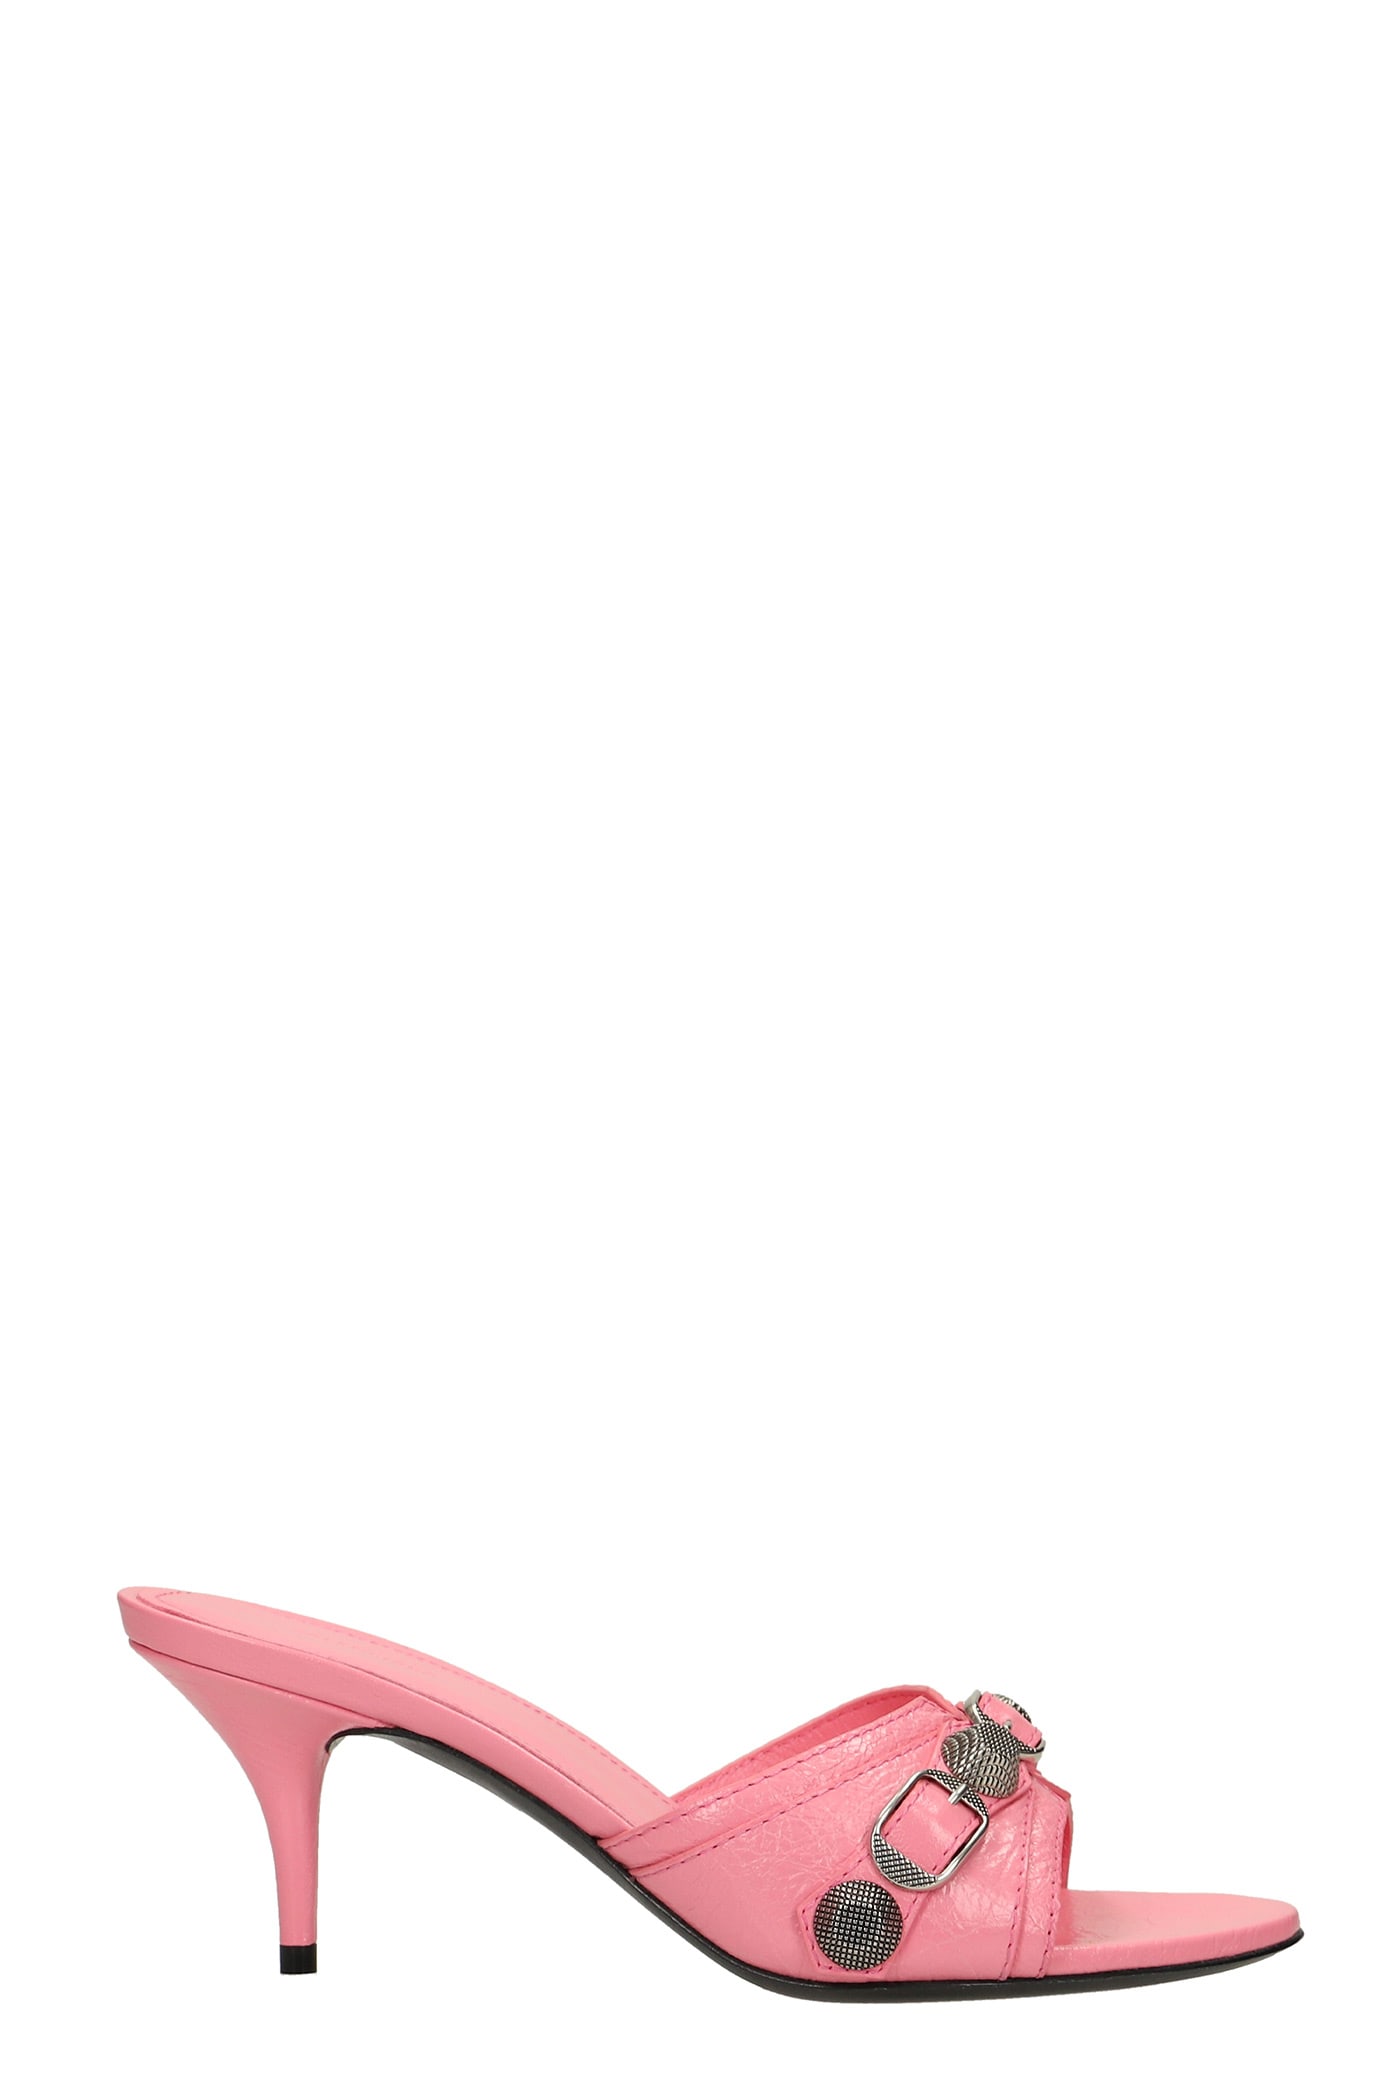 Balenciaga Cagole M70 Slipper-mule In Rose-pink Leather